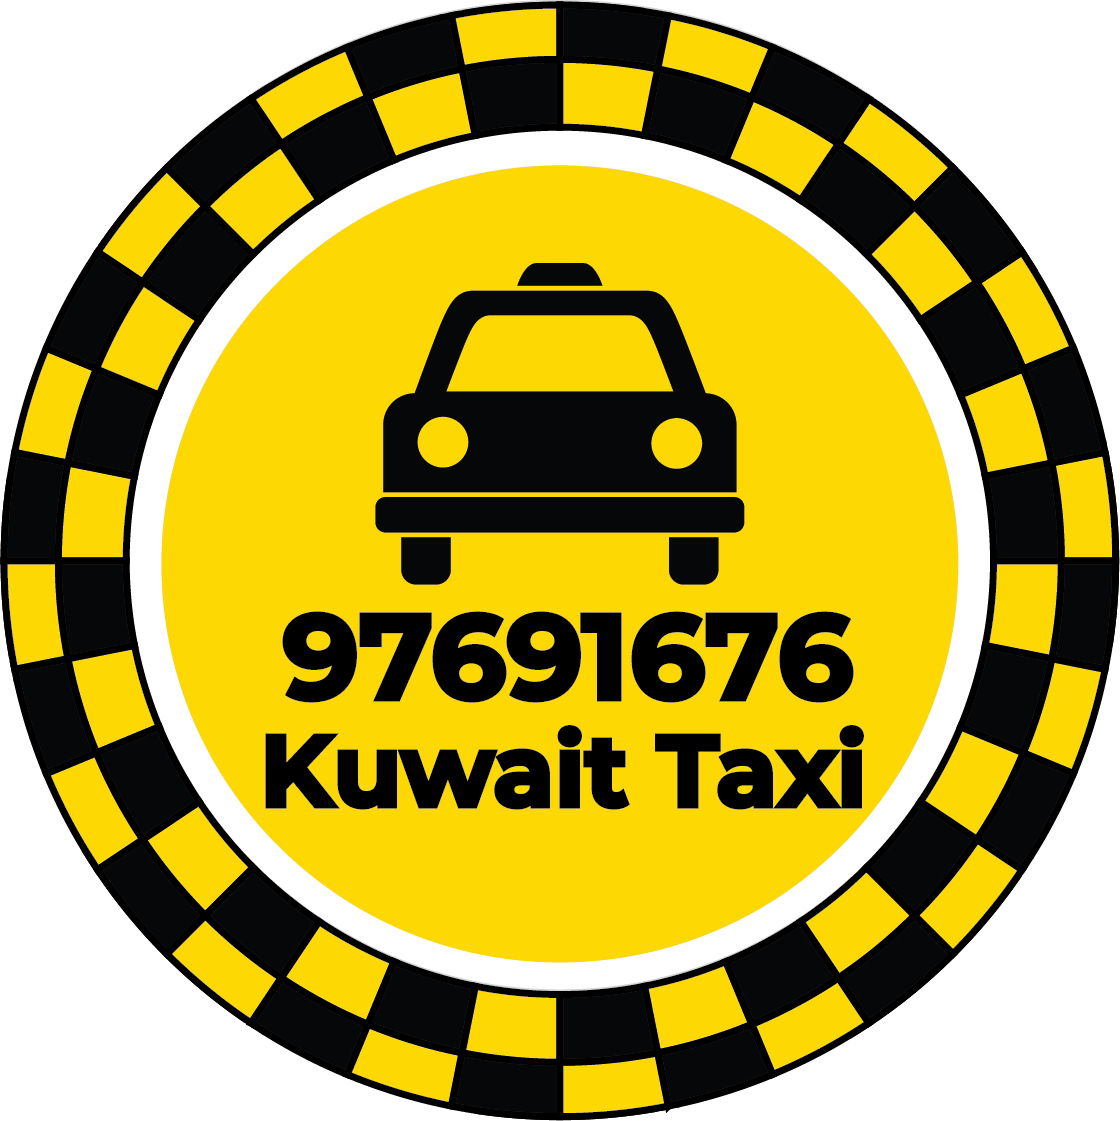 Abdullah Al Mubarak Taxi 97691676 - Taxi in kuwait